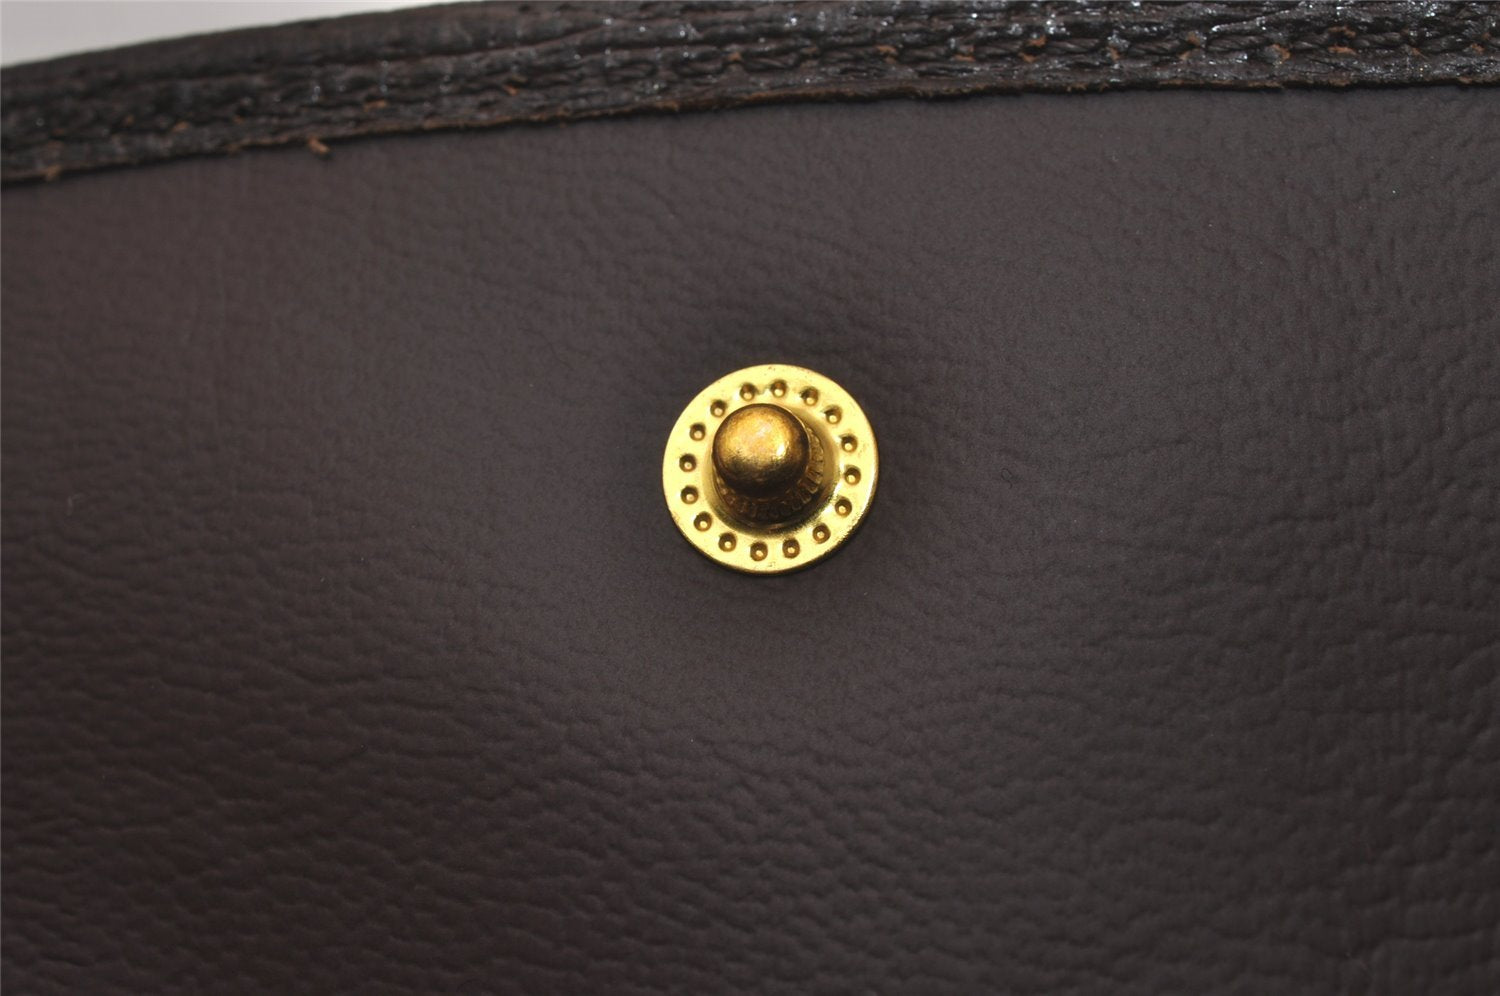 Authentic Burberrys Nova Check Clutch Hand Bag Canvas Leather Beige 1733I